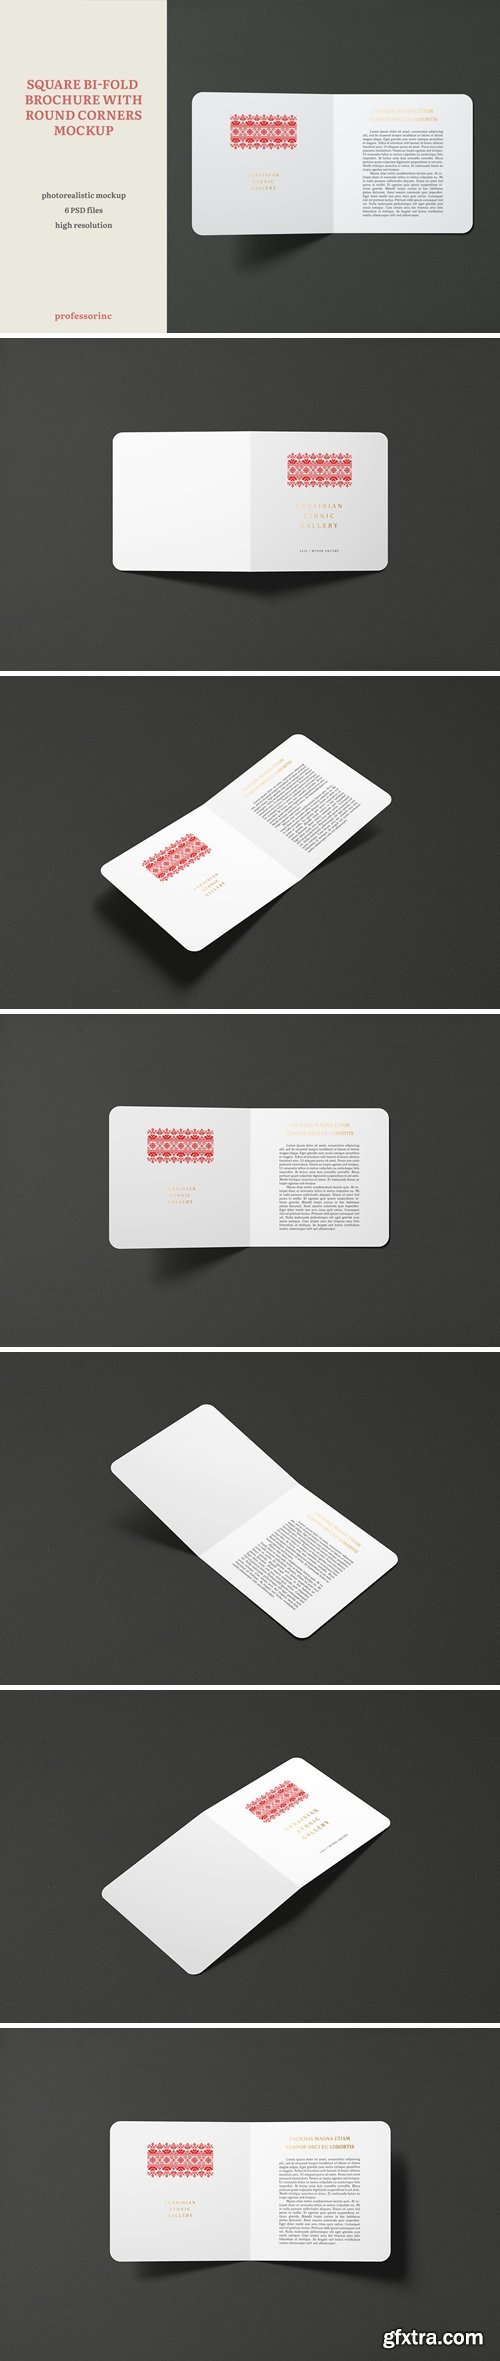 Square Bi-Fold Brochure Mockup With Round Corners